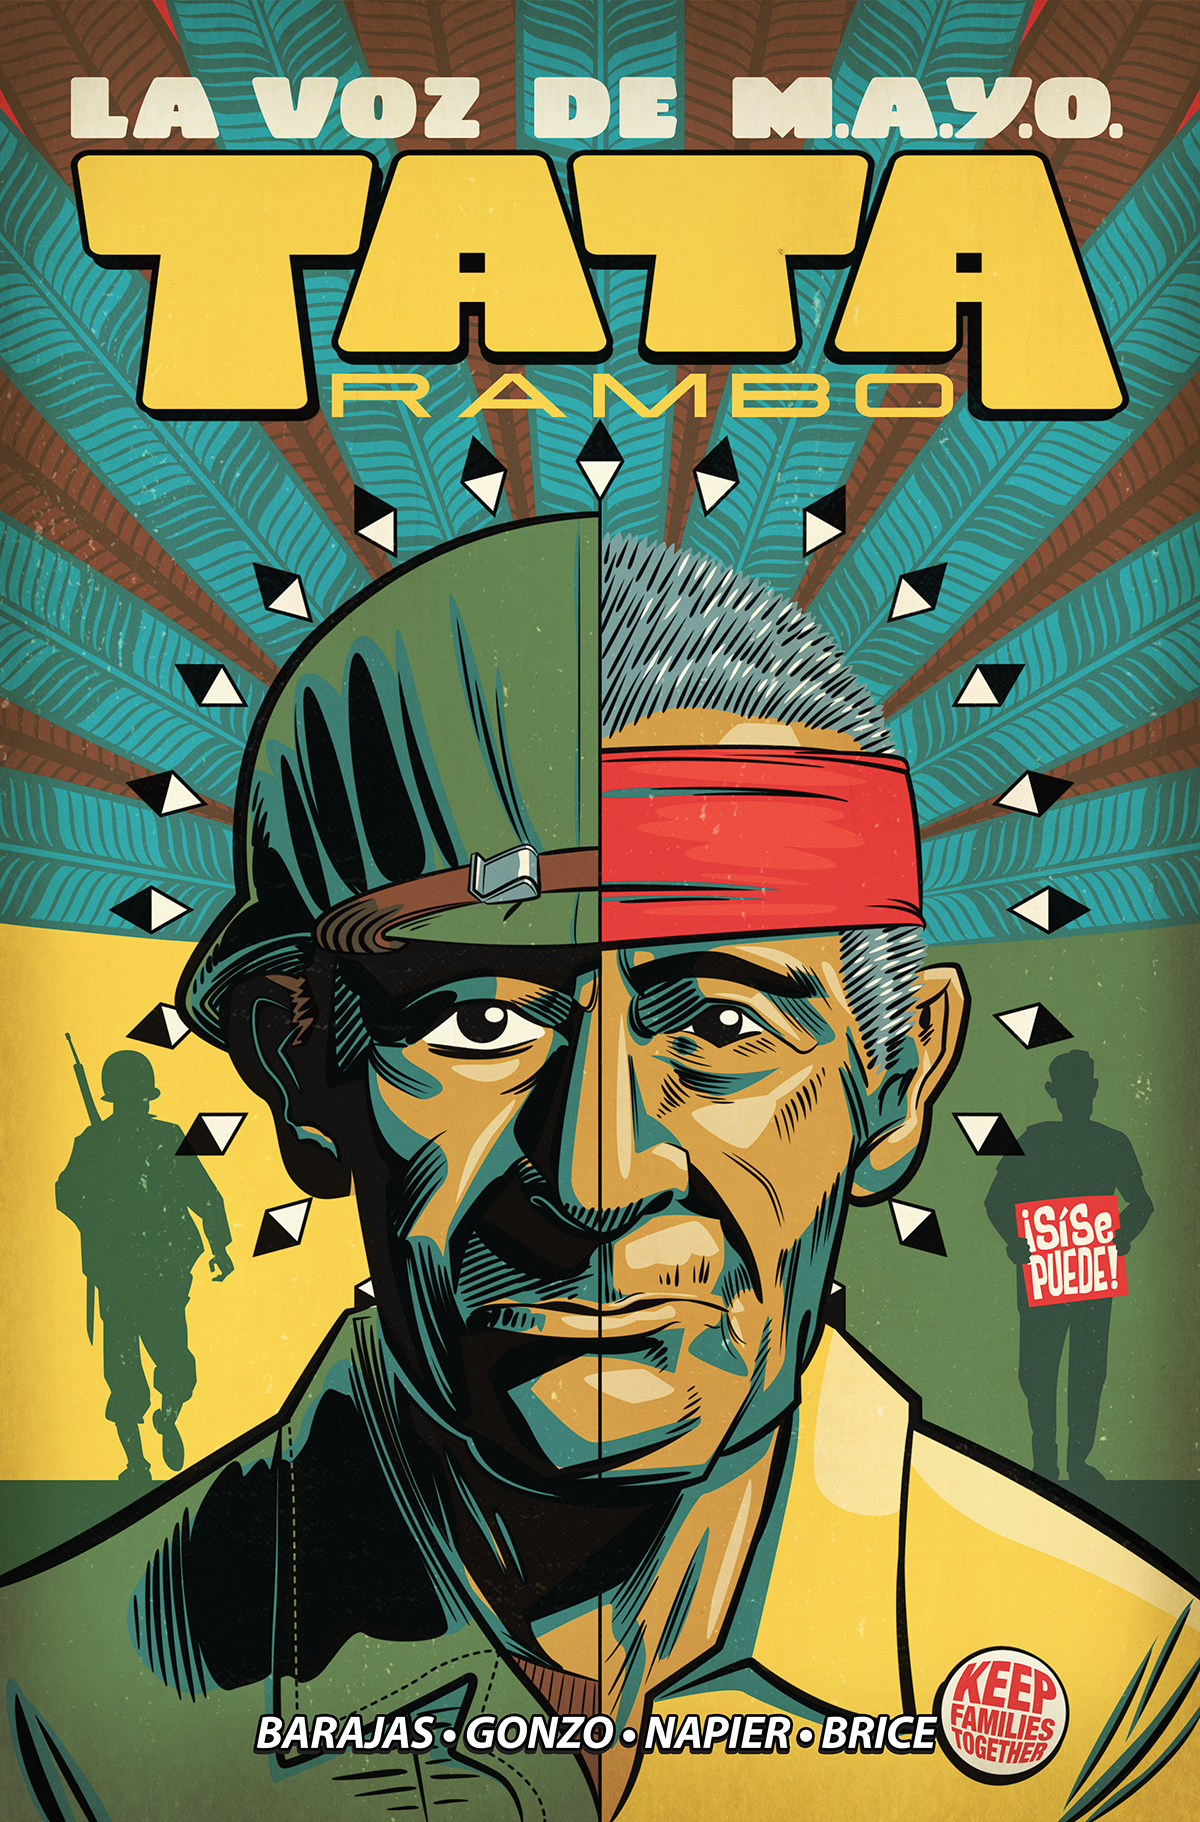 Graphic Novels for Fall 2019: La Voz De M.A.Y.O.: Tata Rambo, Vol. 1